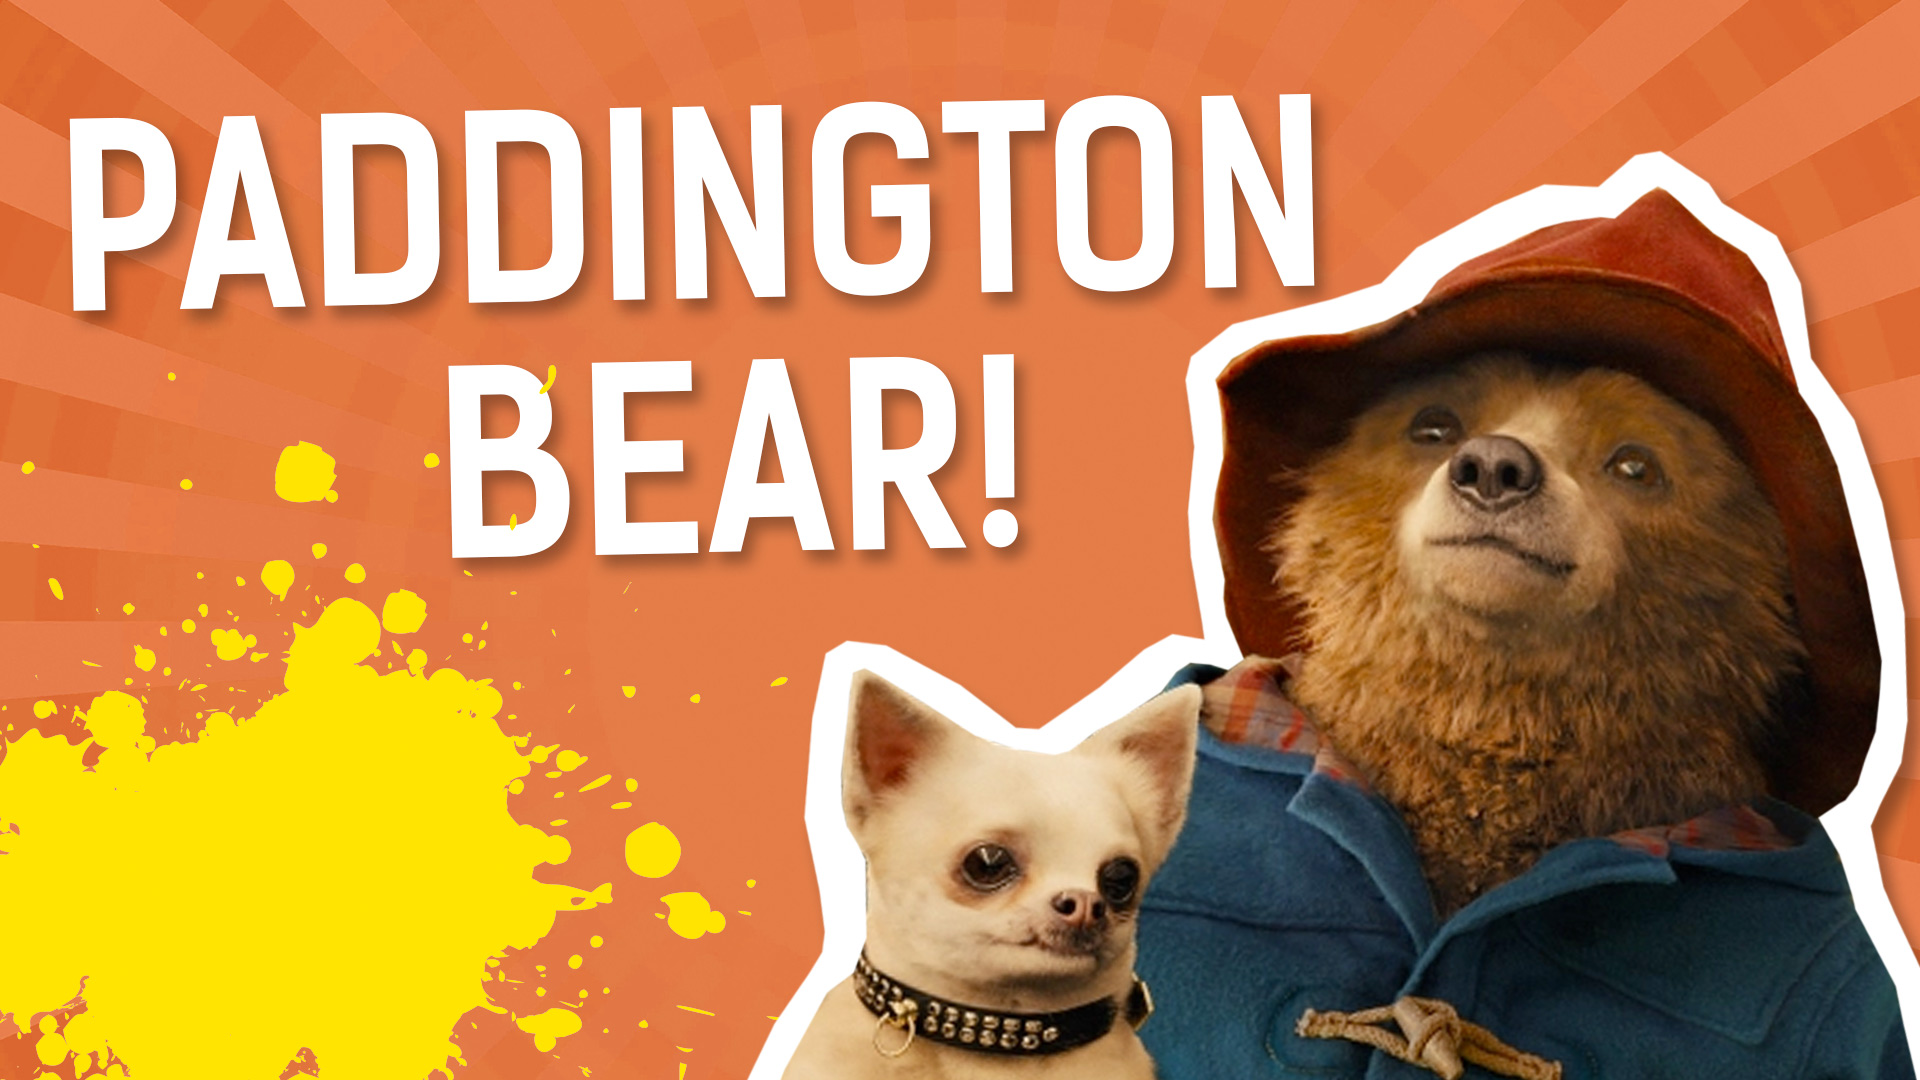 Result: Paddington Bear